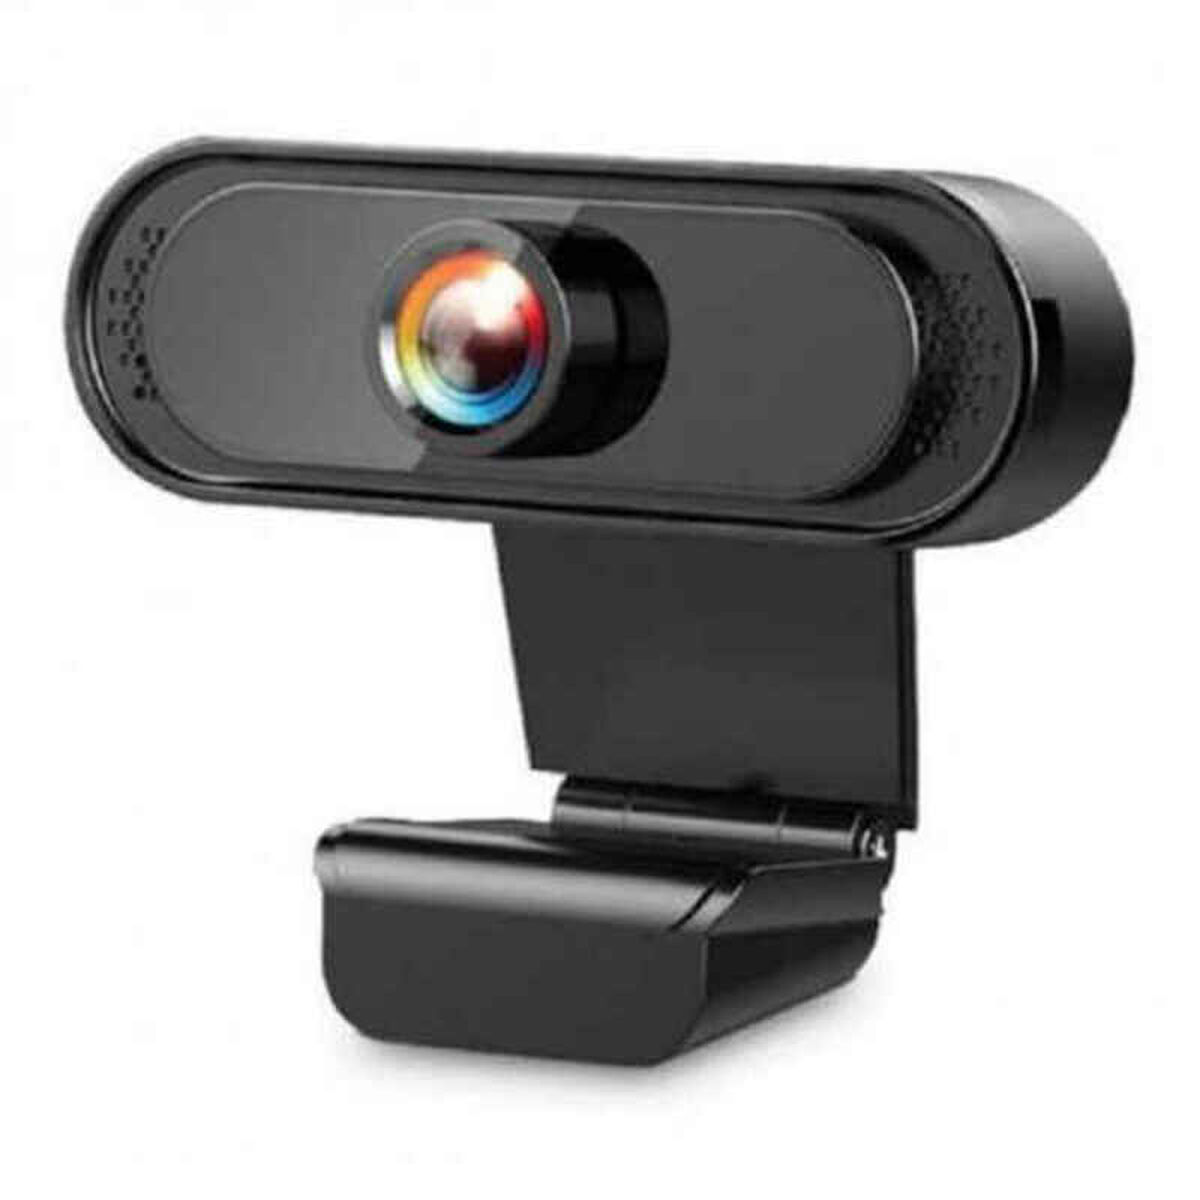 Webcam Nilox NXWC01 FHD 1080P Noir